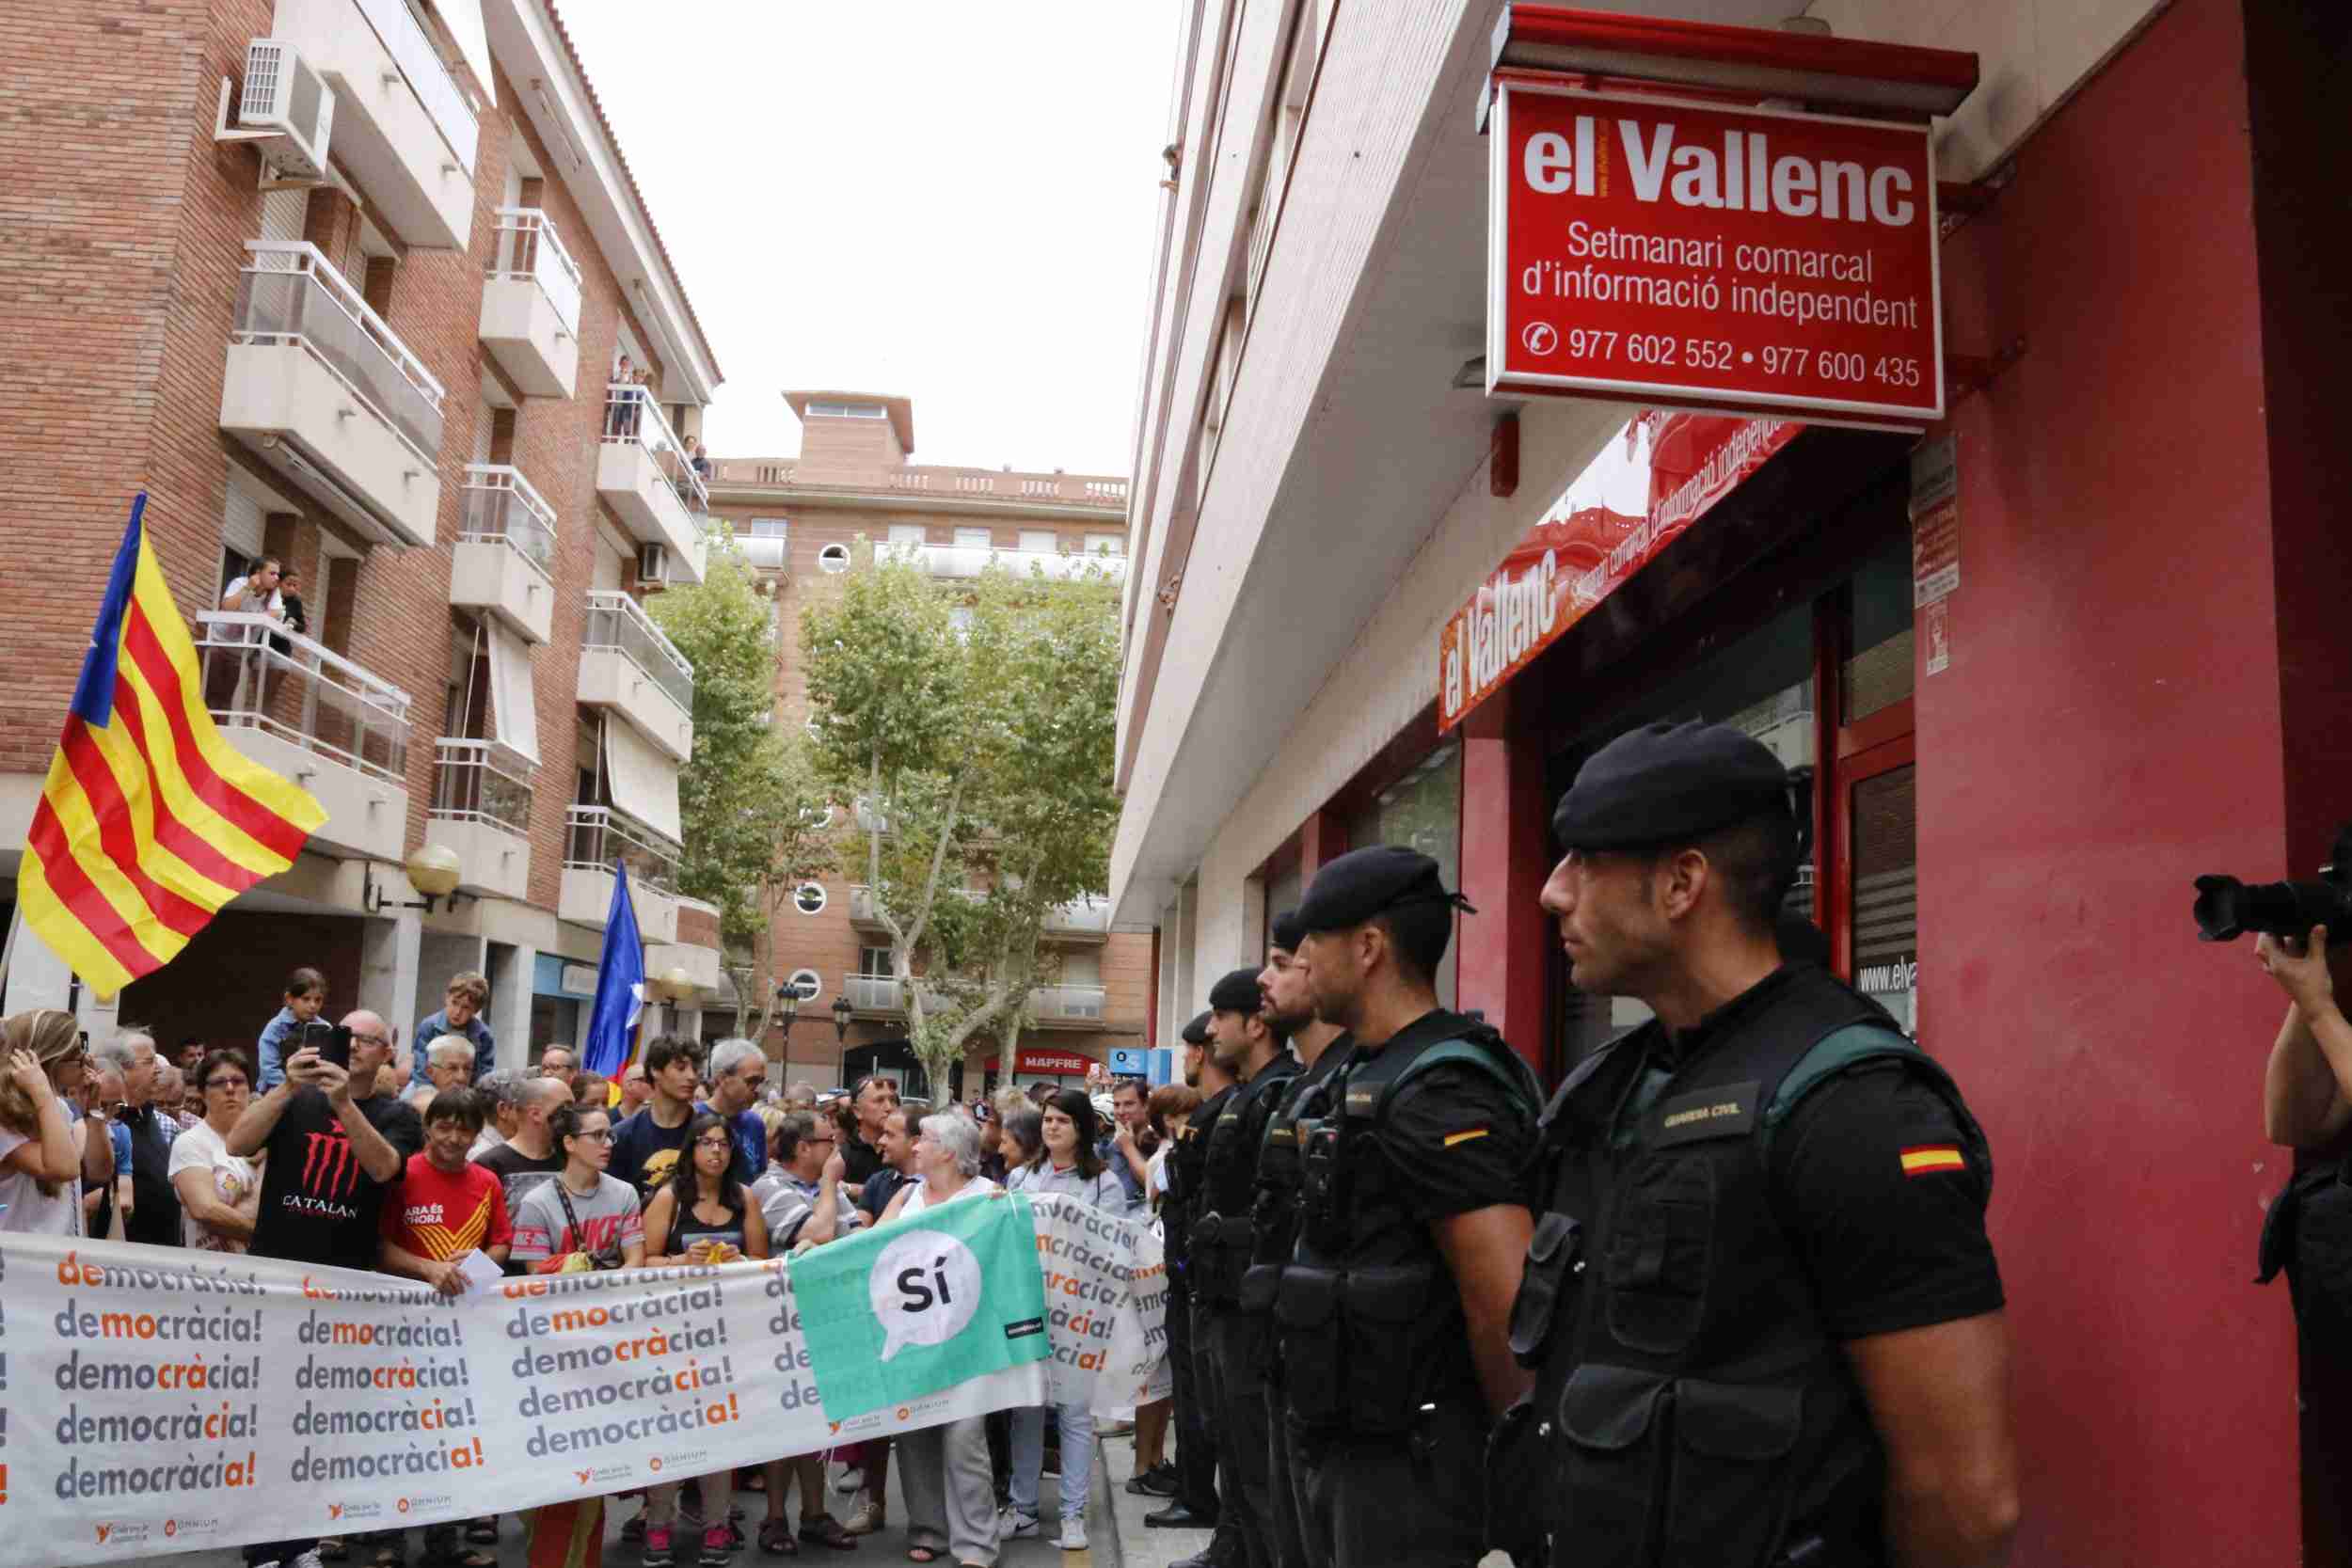 Civil Guard enters Catalan newspaper 'El Vallenc' looking for referendum material